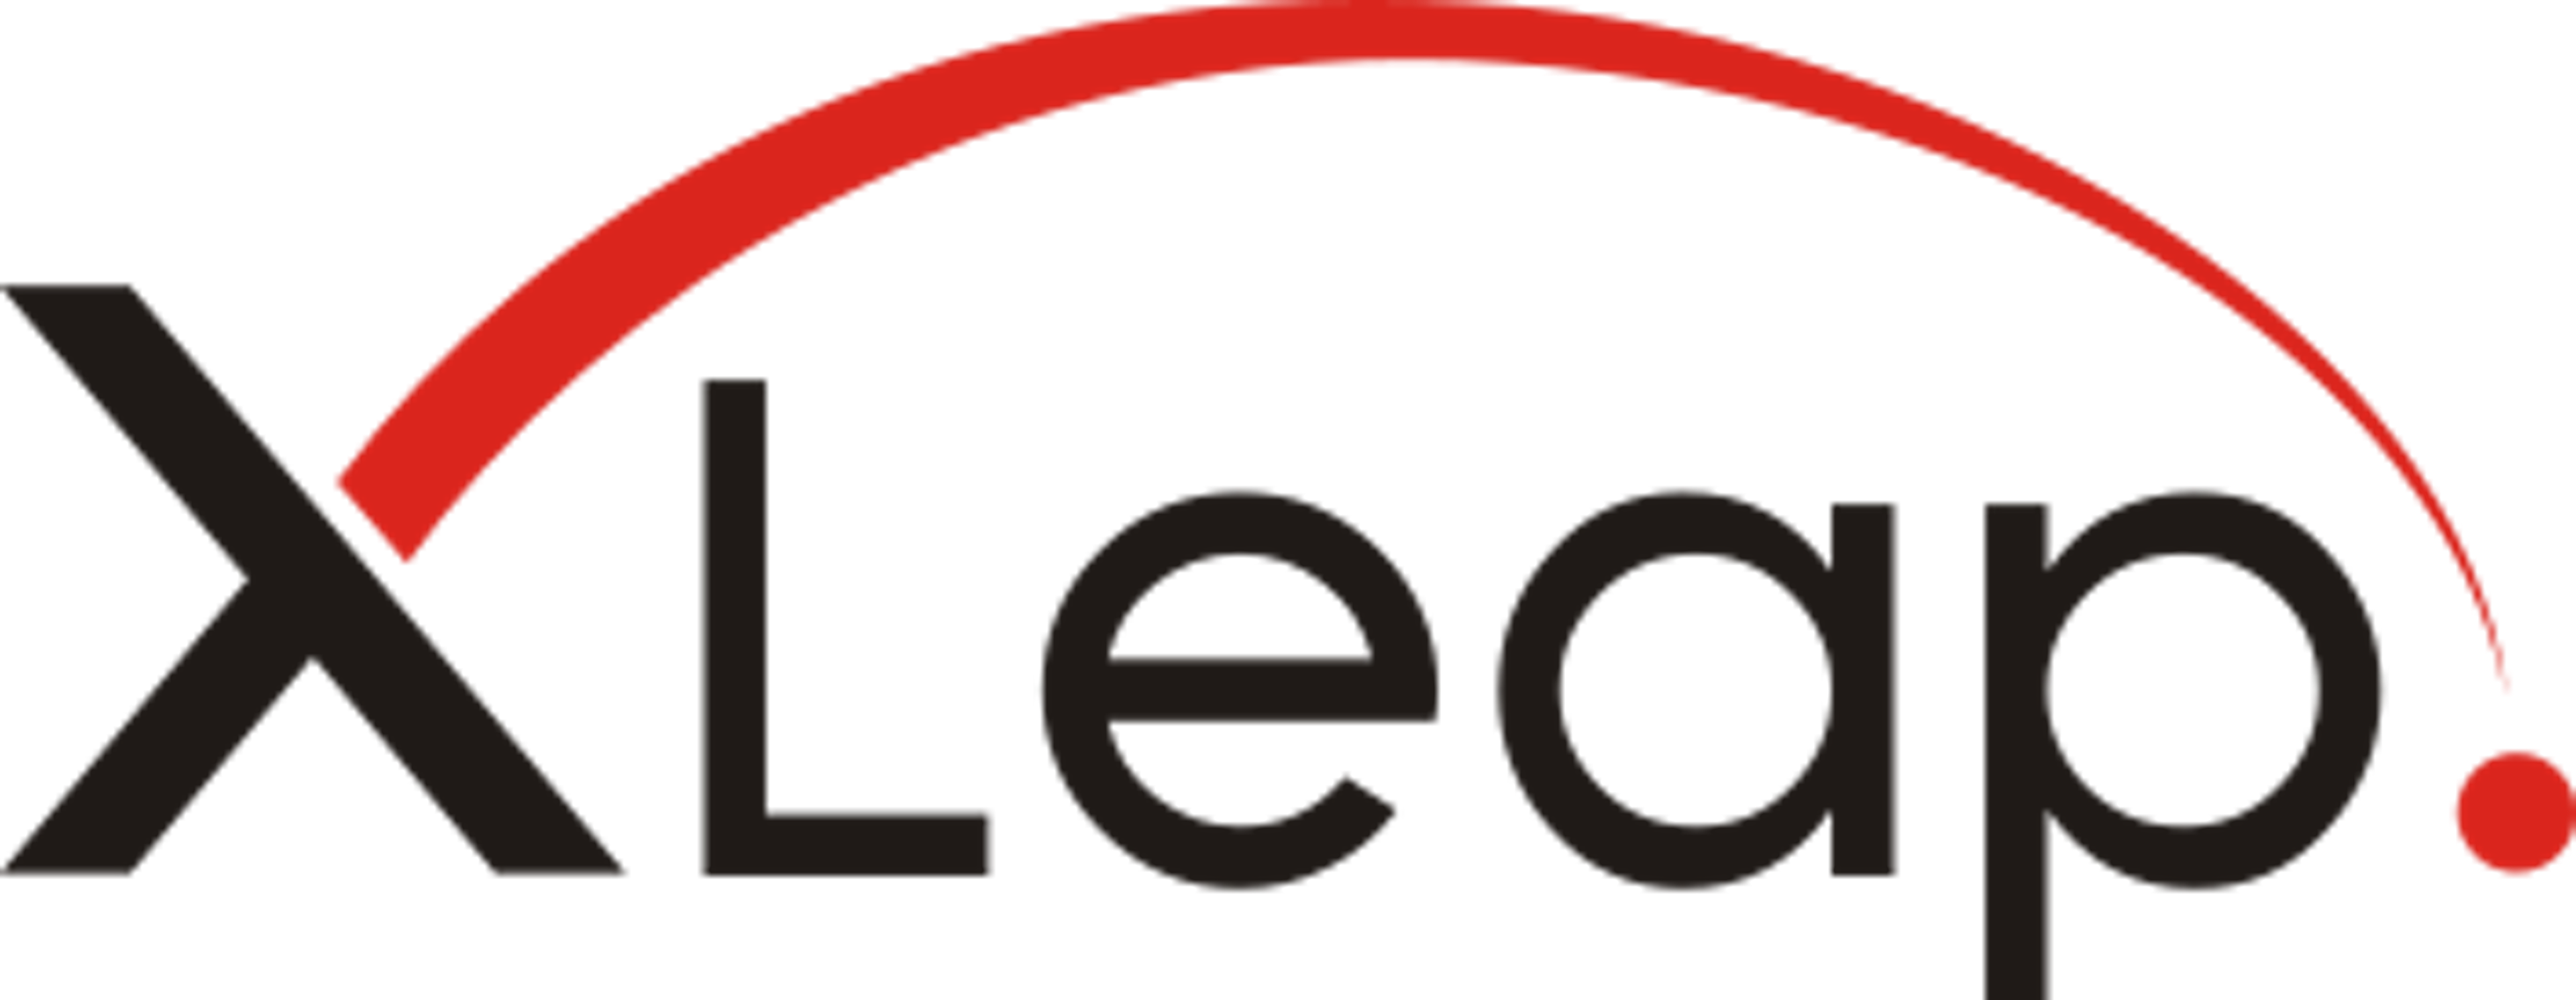 XLeap by MeetingSphere Logo